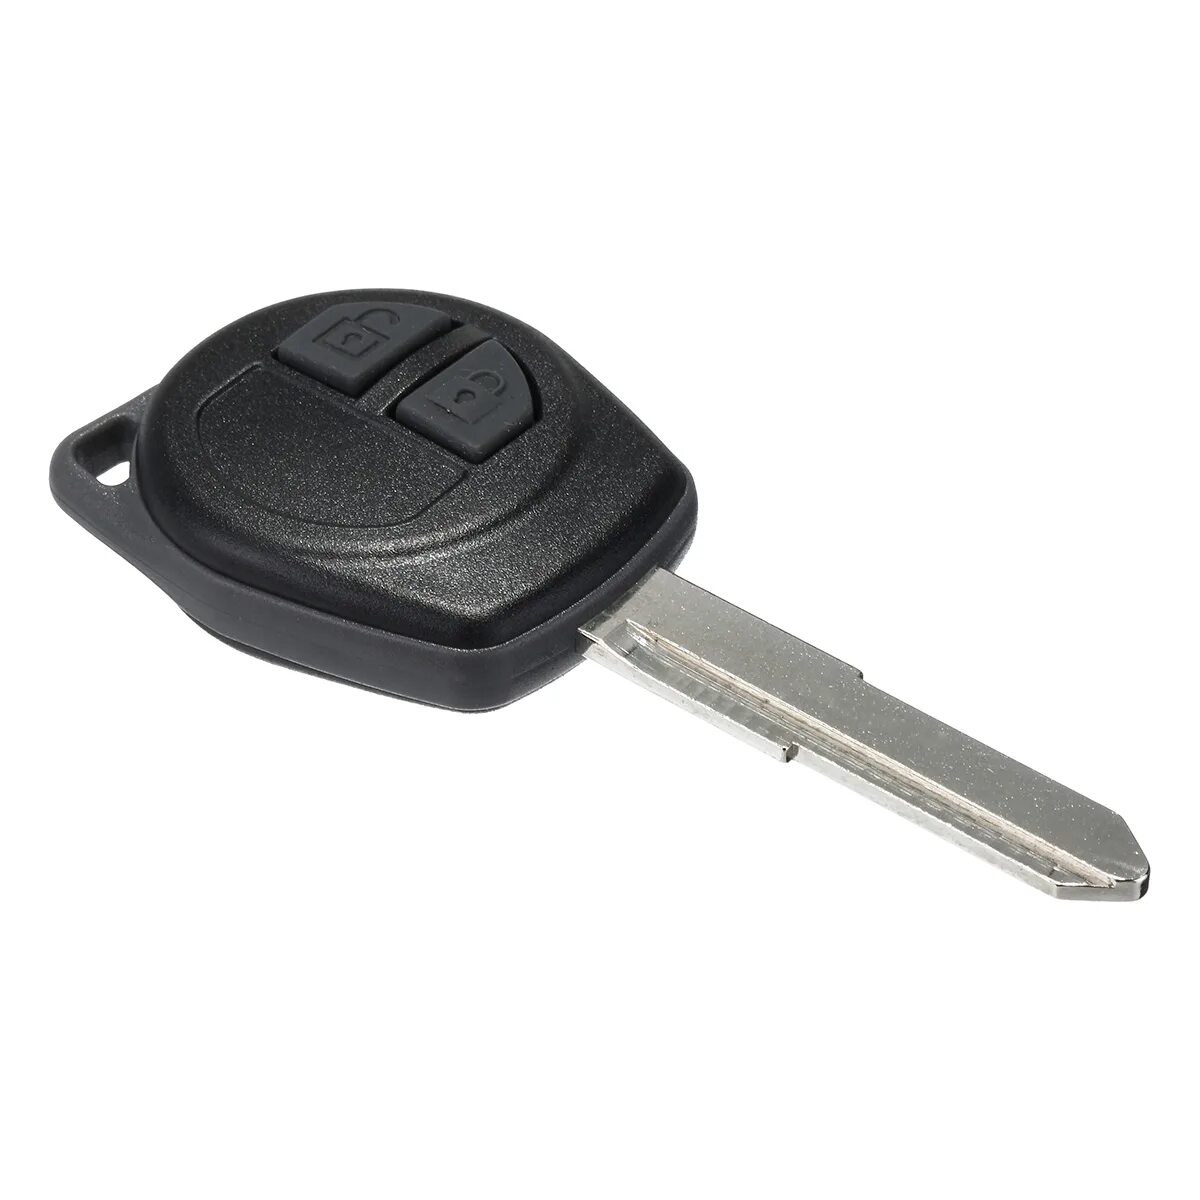 2003 Suzuki Ignis Key FOB. Aprilia Scarabeo 400 пульт ключ. Suzuki Ignis 2007 ключ от машины. Nissan пульт ключа. Машина пульт ключ